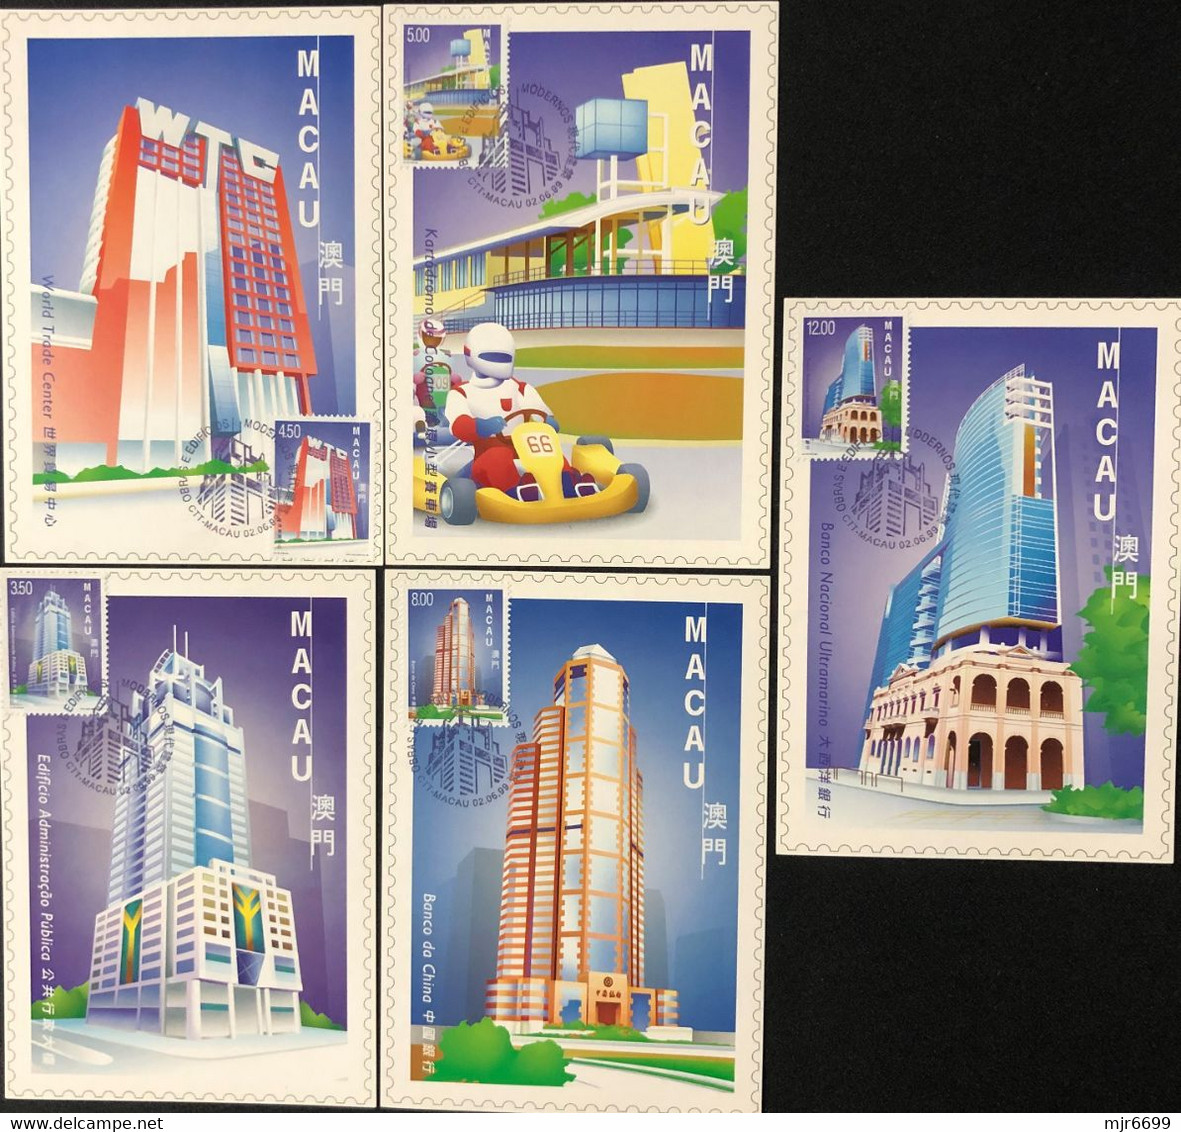 MACAU - 1996 MODERN BUILDINGS SET MAX CARDS OF 10 - Cartes-maximum